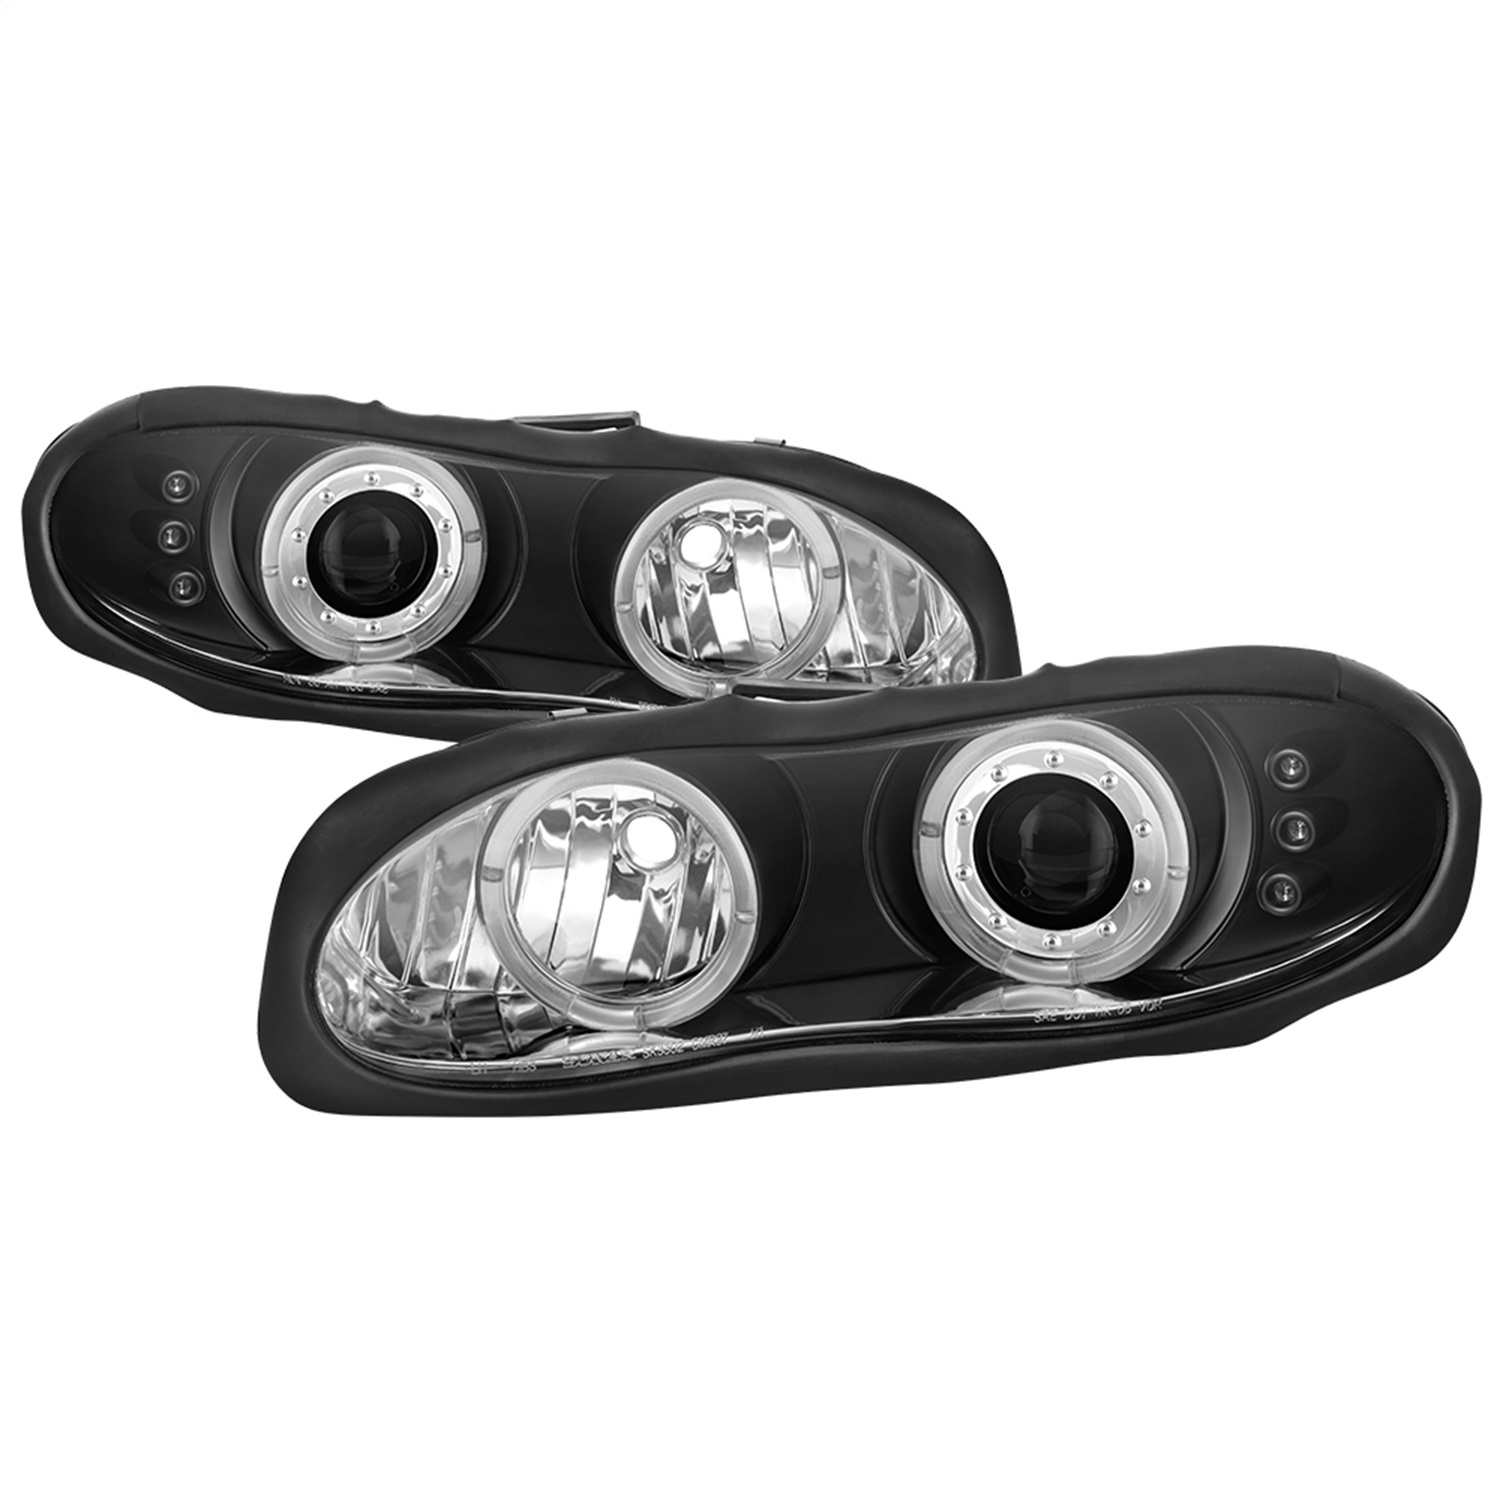 Spyder Auto 5009234 Halo LED Projector Headlights Fits 98-02 Camaro